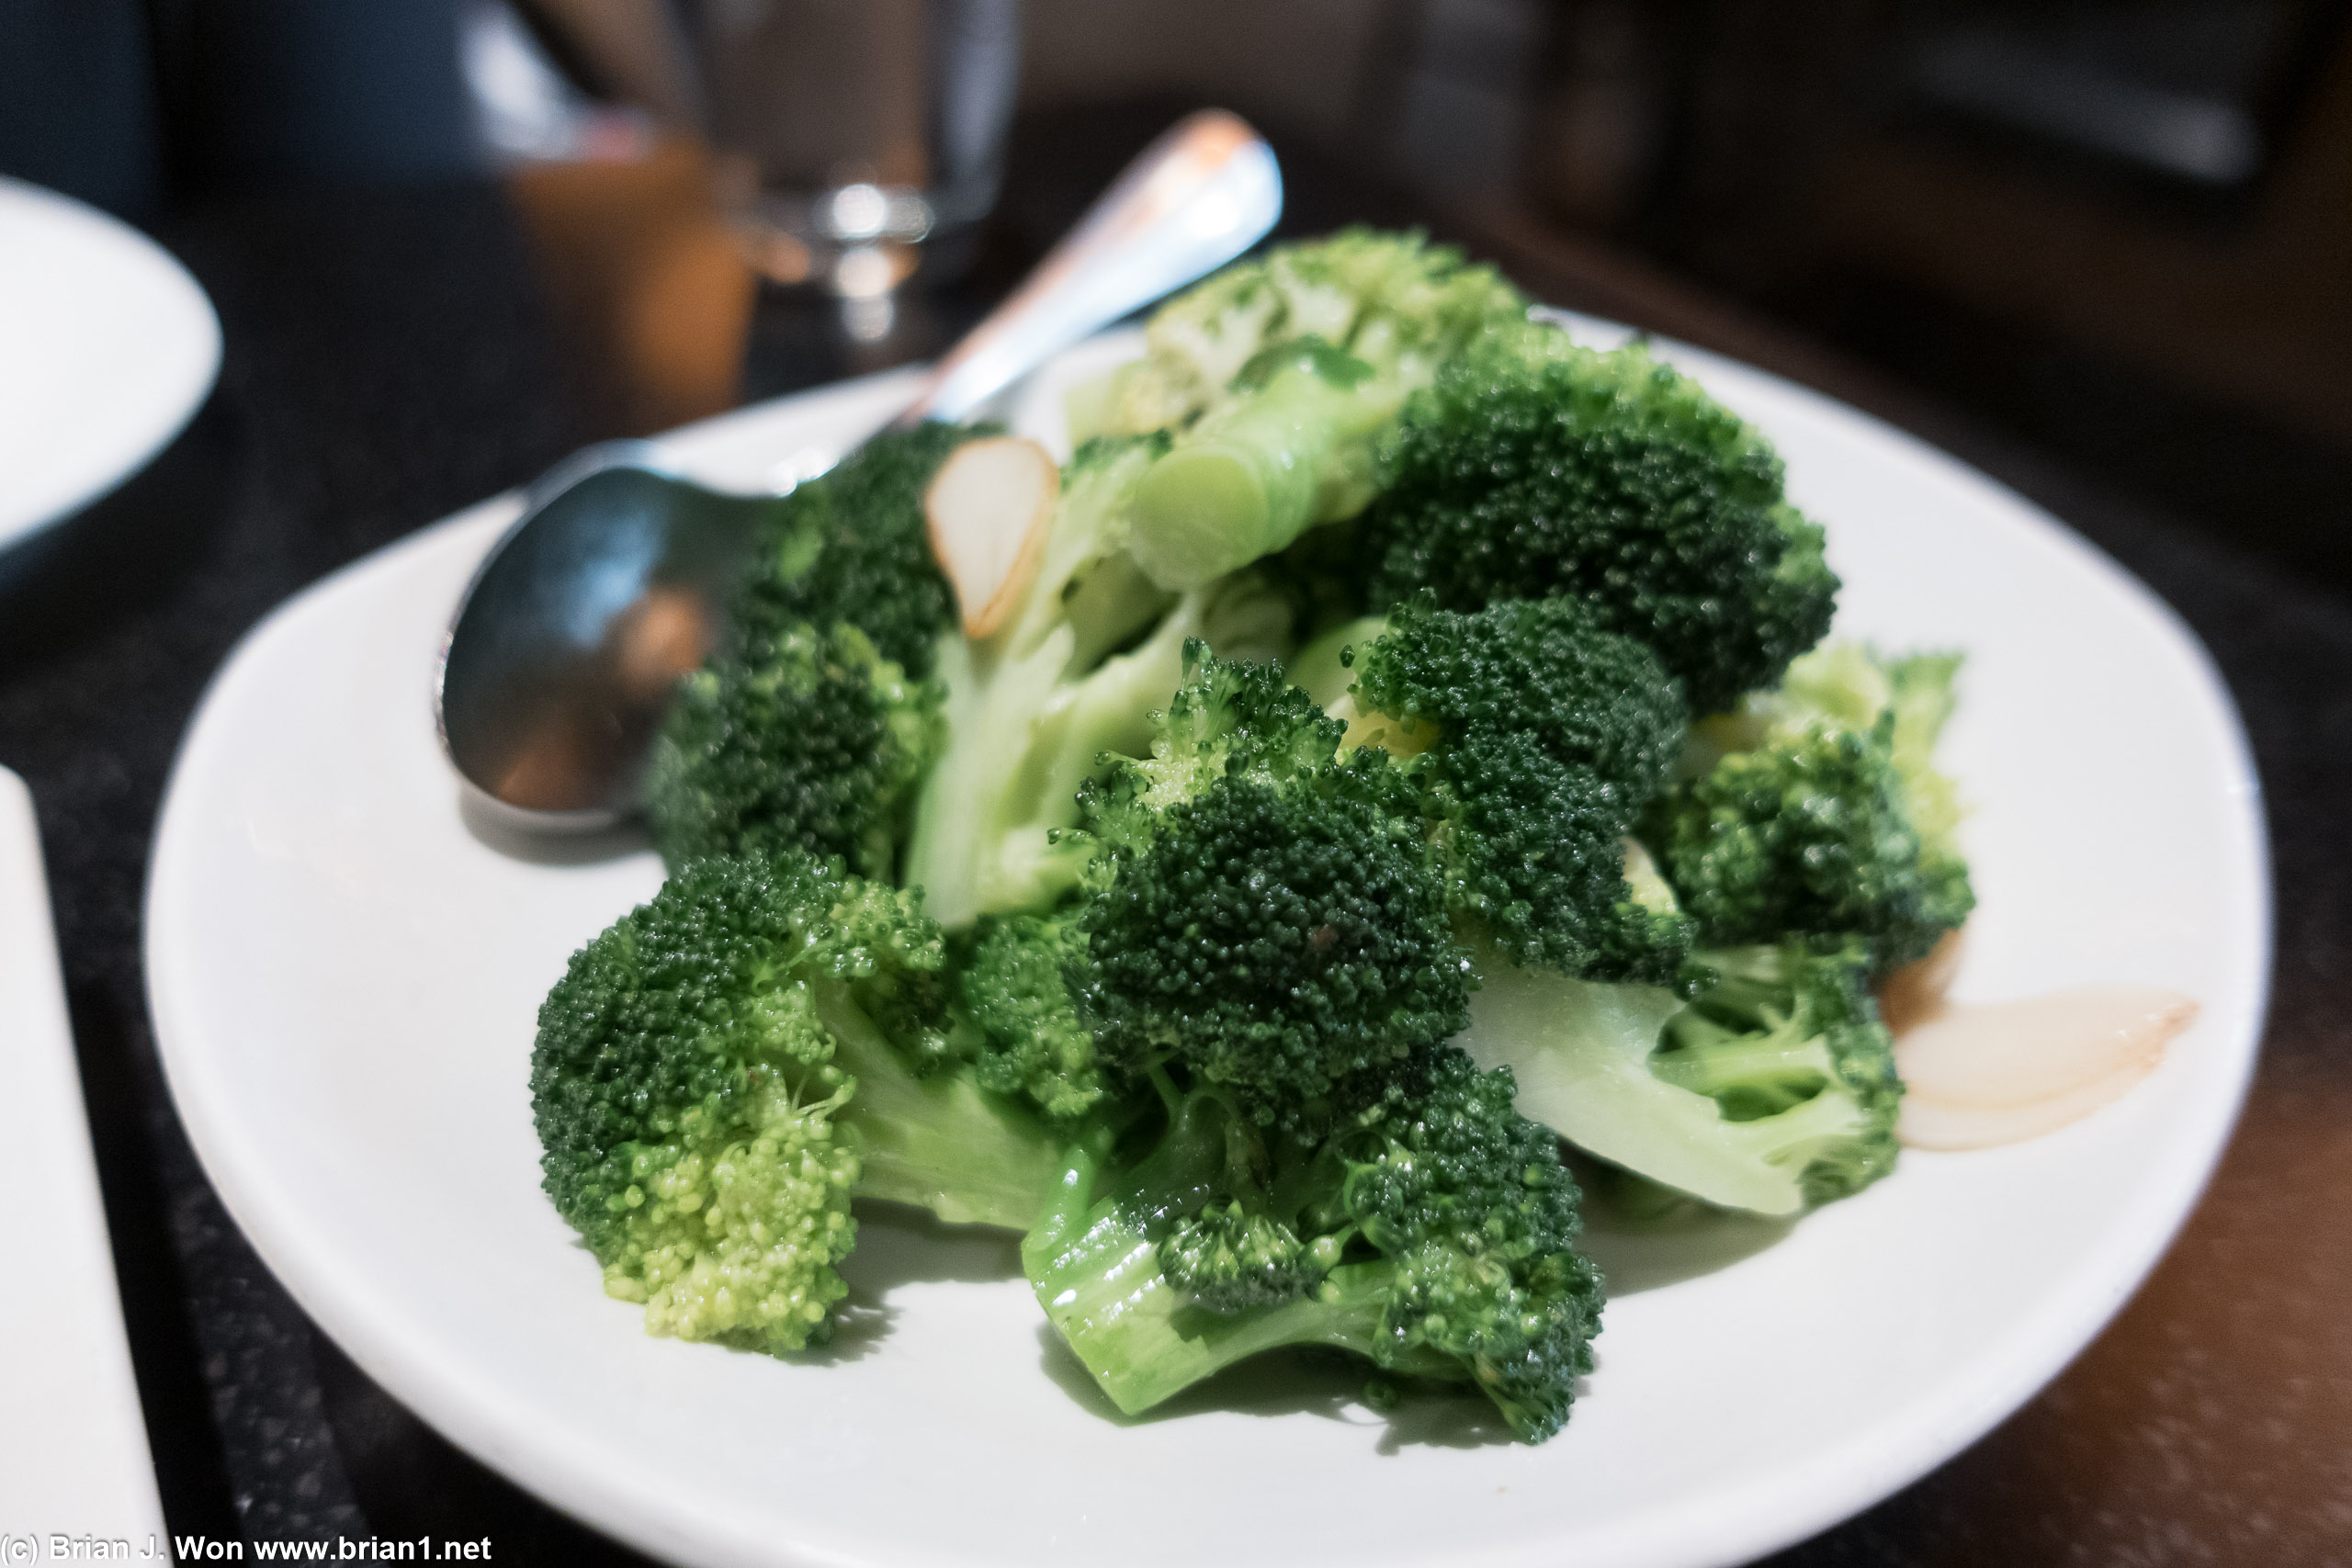 Broccoli are good too.